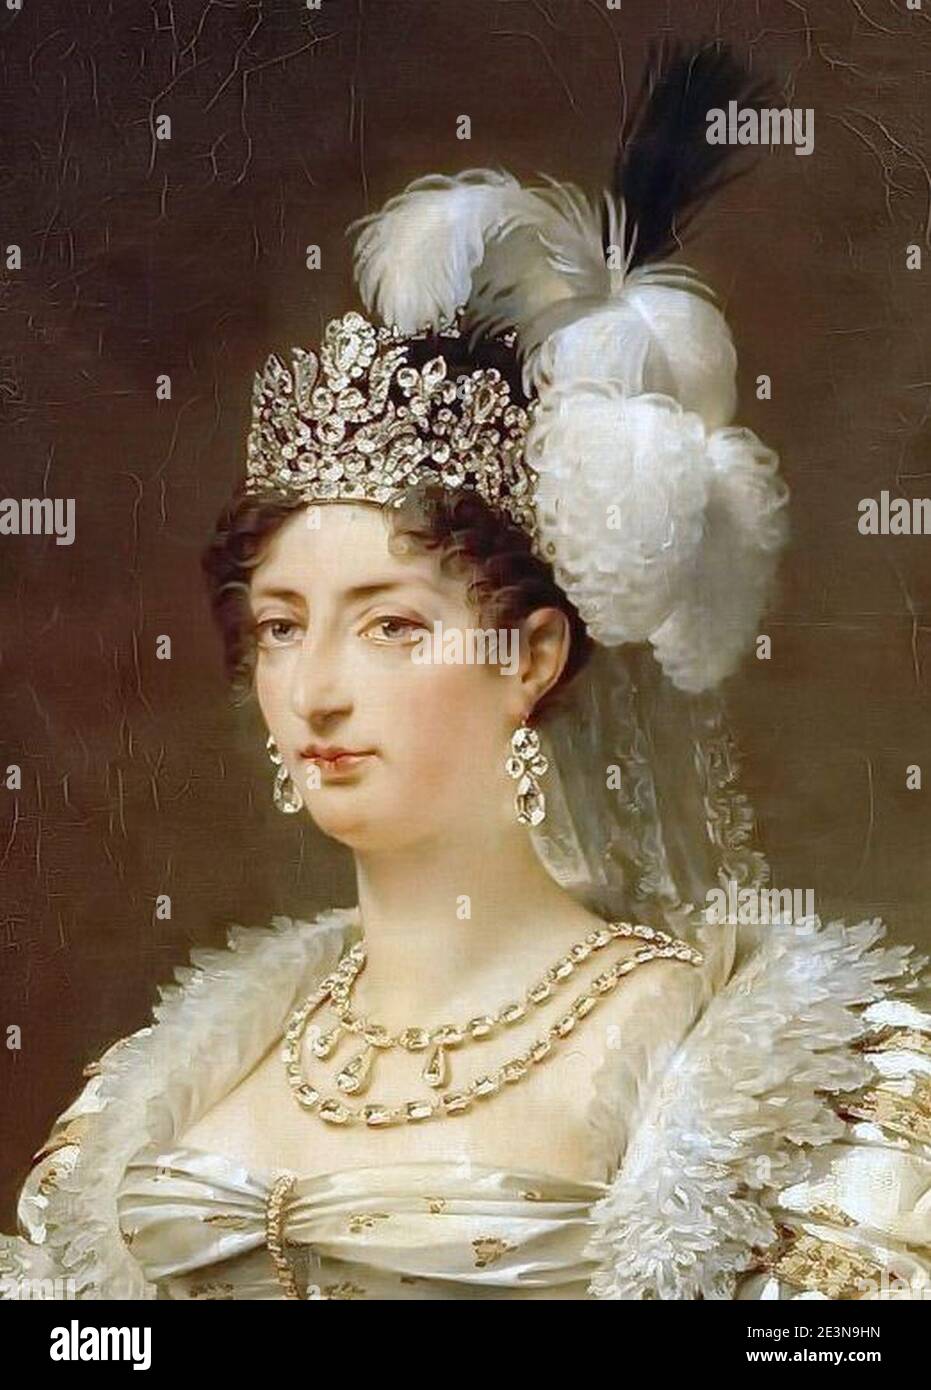 Marie Thérèse of France, Duchess of Angoulême. Stock Photo